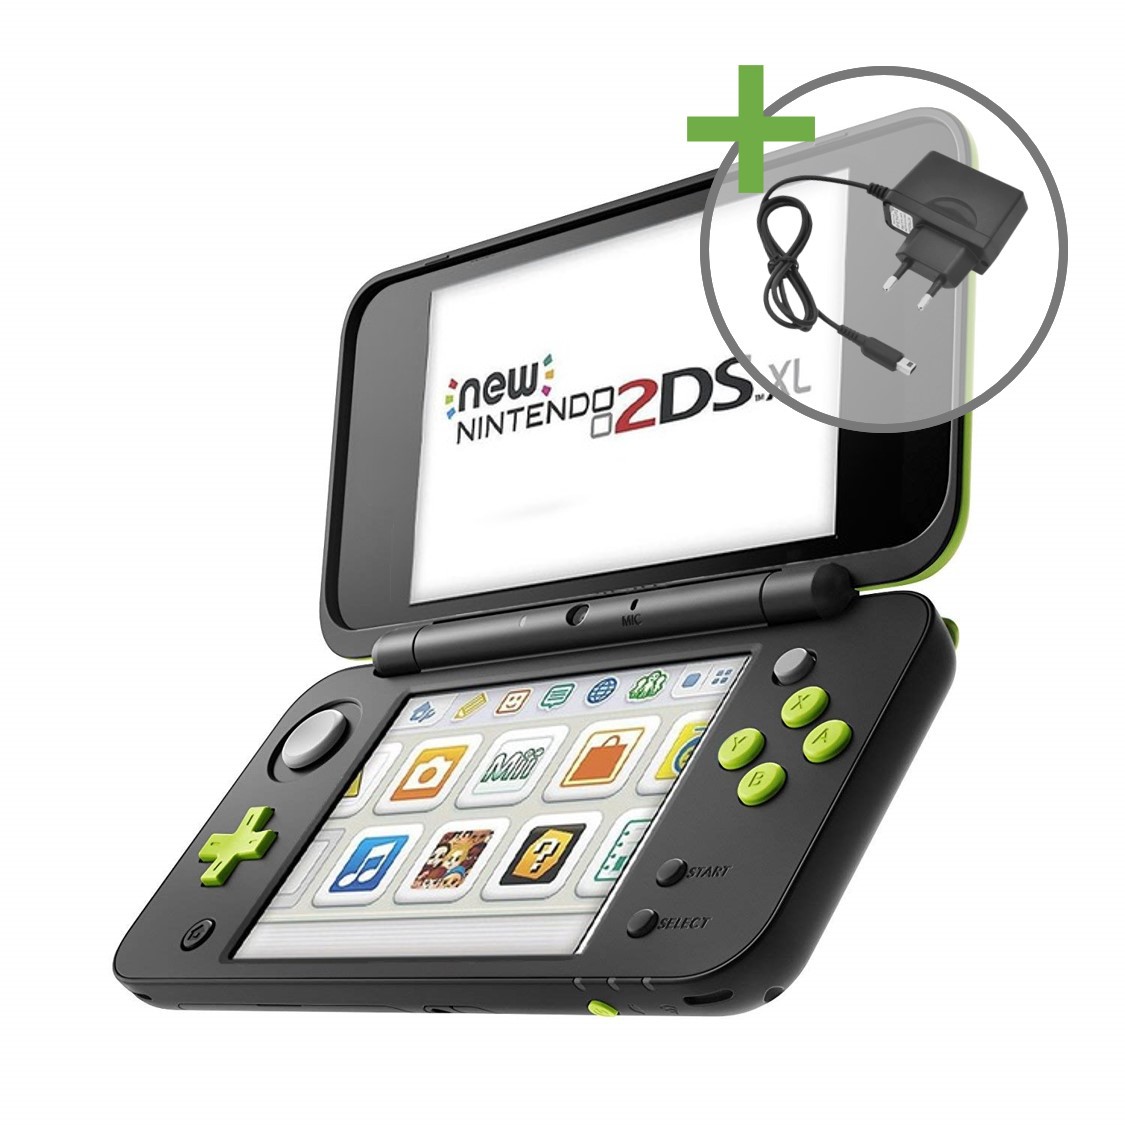 New Nintendo 2DS XL - Black/Lime - Nintendo 3DS Hardware